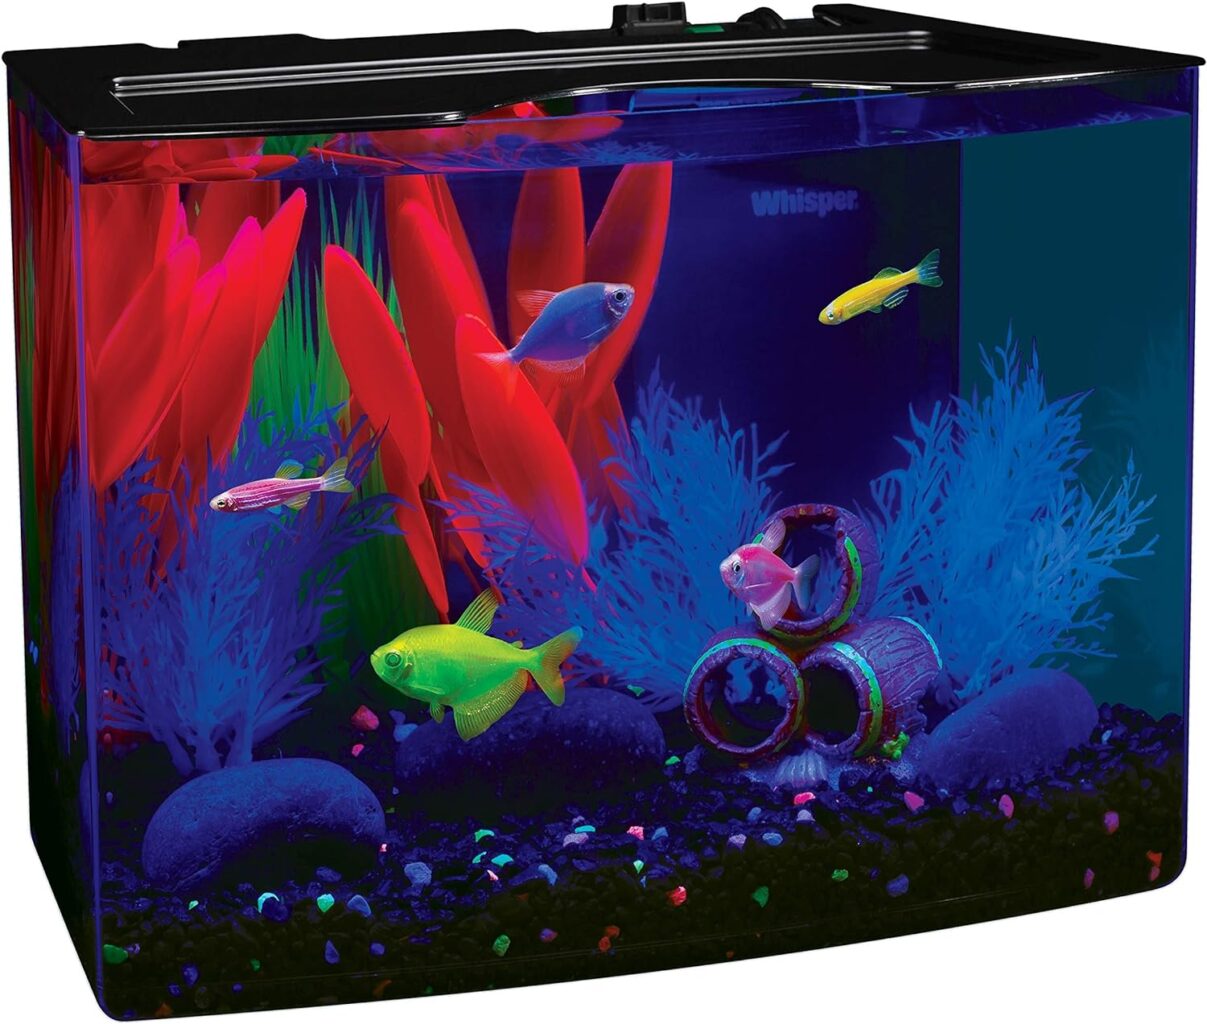 GloFish Aquarium Fish Tank Kits, Includes Fish Tank Decorations and LED Lighting, Tetra Filter and Water Conditioner 5-gallon crescent kit